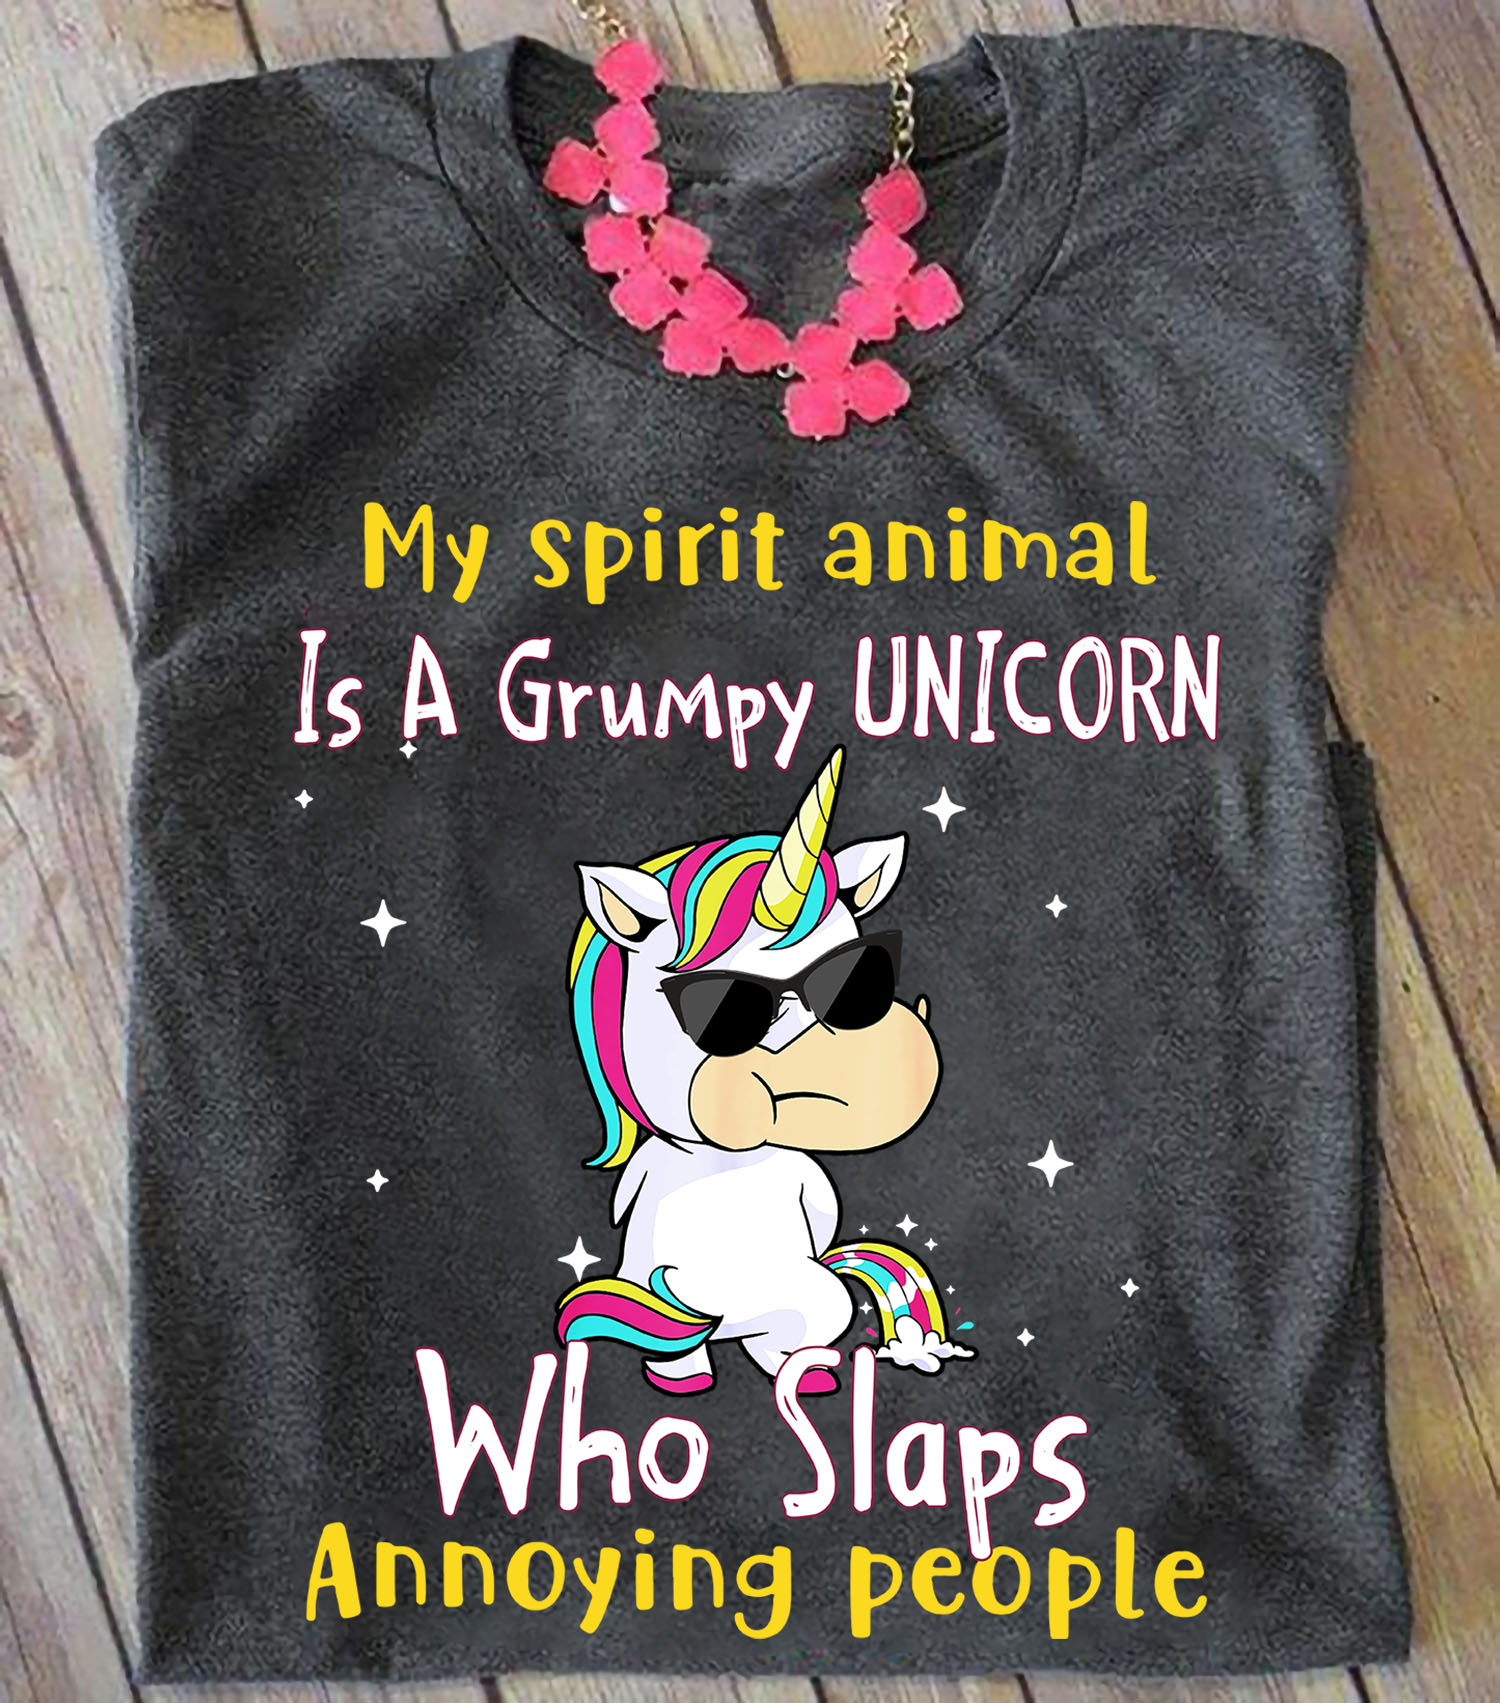 My spirit animal is a grumpy unicorn who slaps annoying people